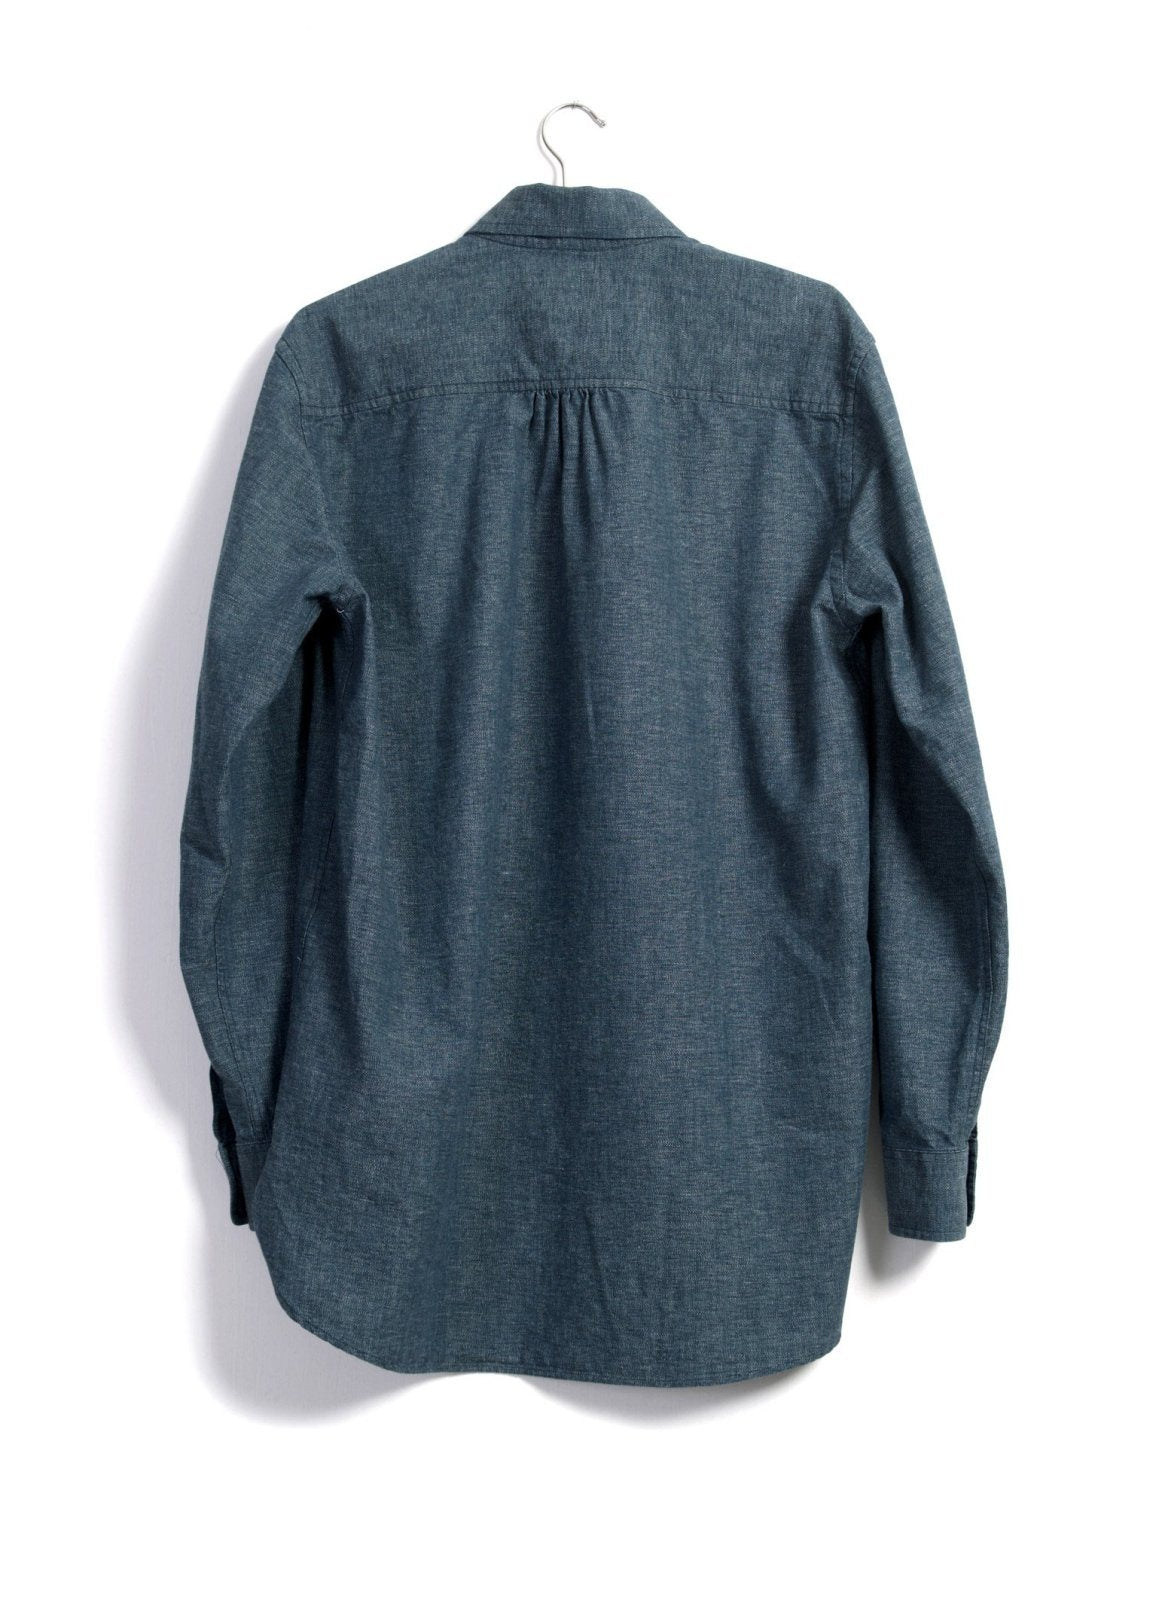 SEBASTIAN | Long Pull On Shirt | Wave Indigo | €200 -HANSEN Garments- HANSEN Garments